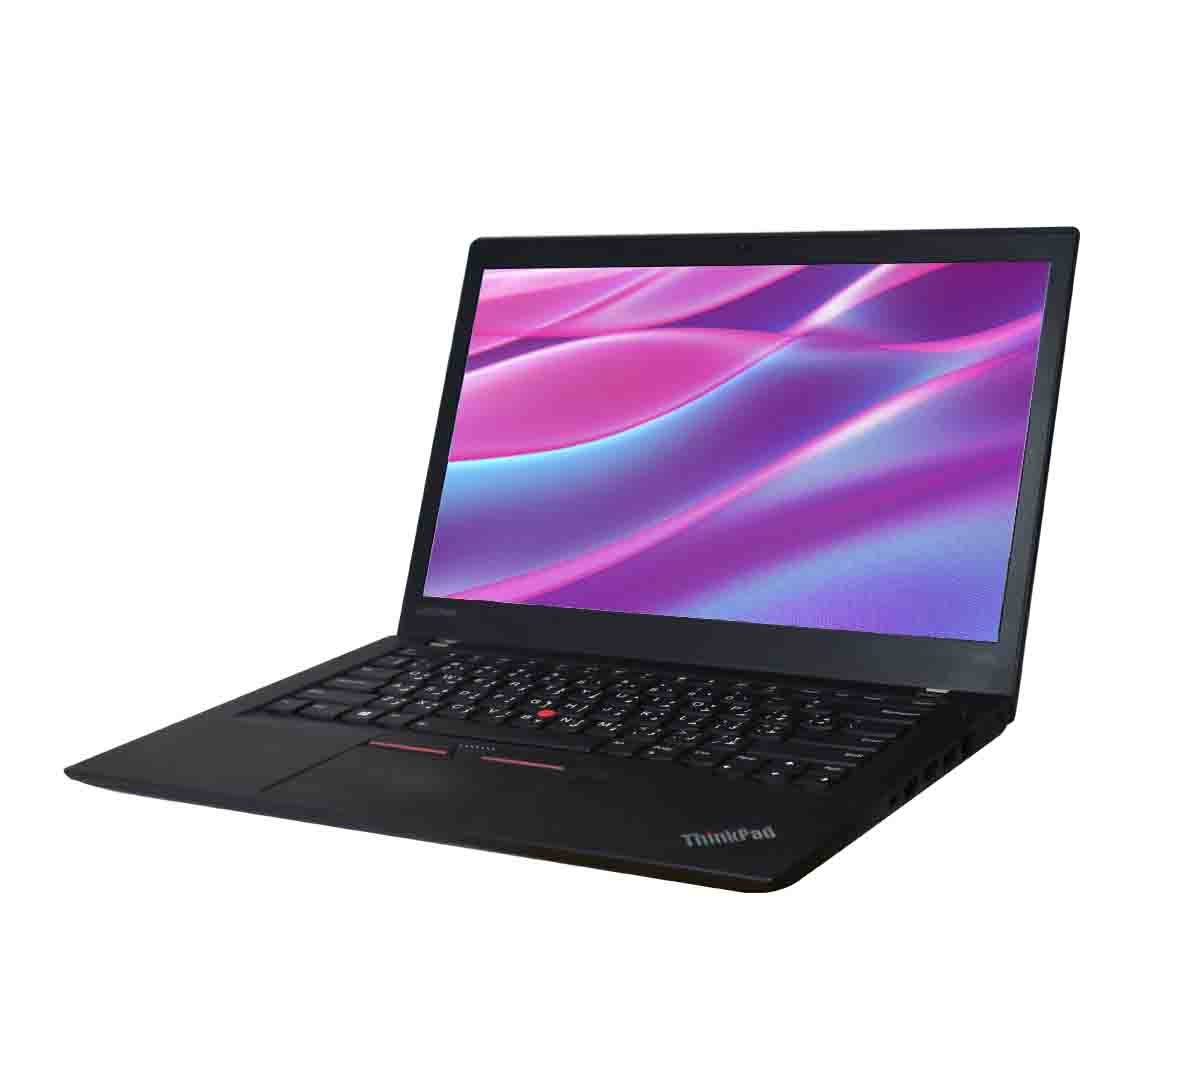 Lenovo ThinkPad T470s Business Laptop, Intel Core i7-7th Generation CPU, 8GB RAM, 256GB SSD, 14 inch Display, Windows 10 Pro